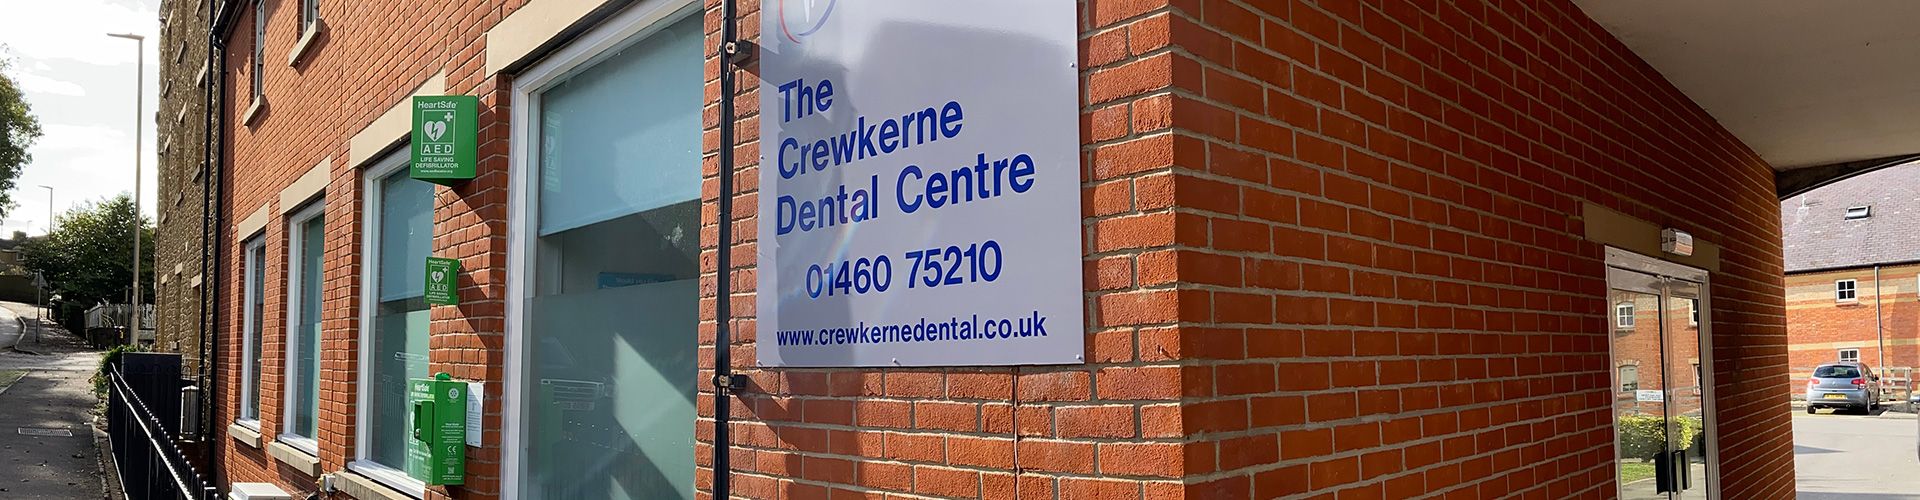 Crewkerne Dental Centre | The Smile Dental Group